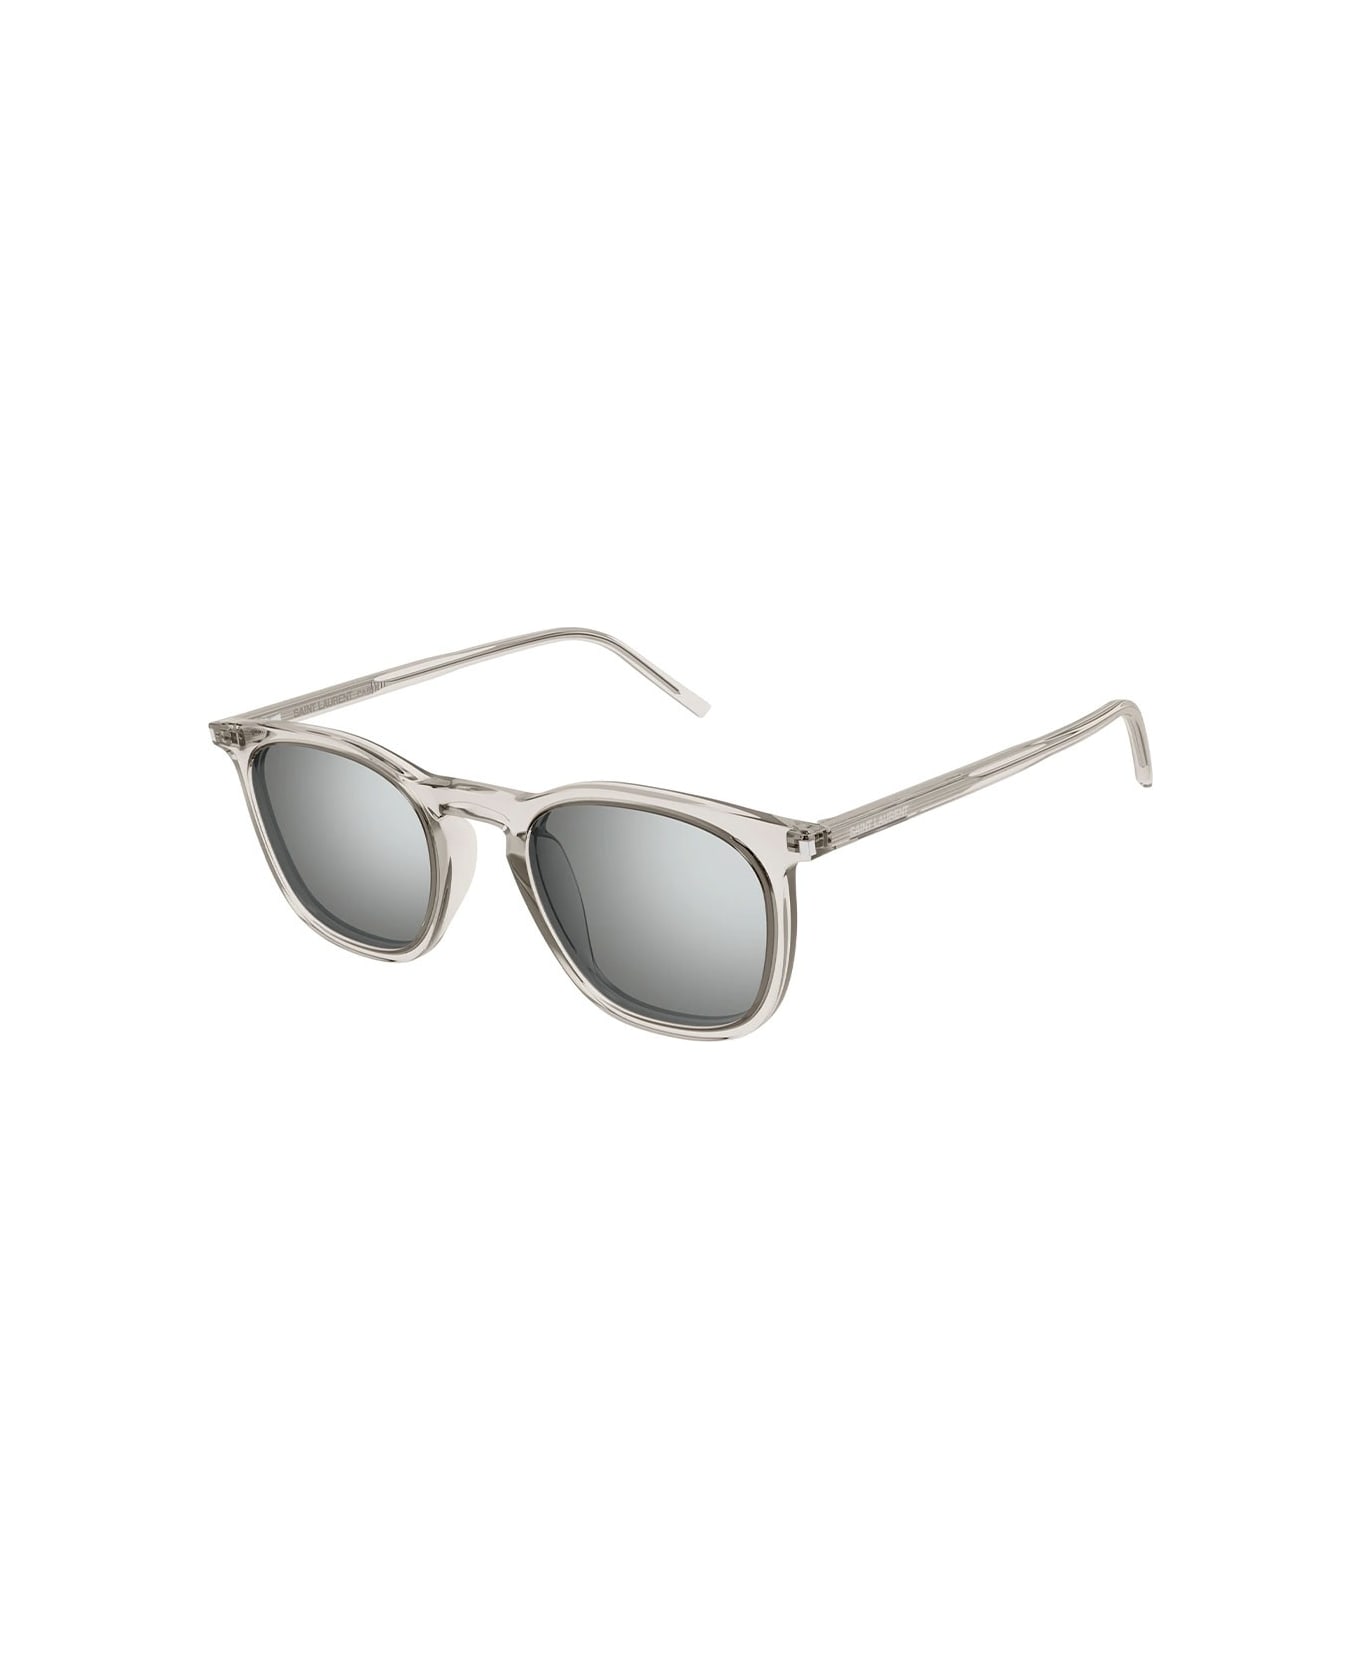 Saint Laurent Eyewear Sunglasses - Beige/Grigio